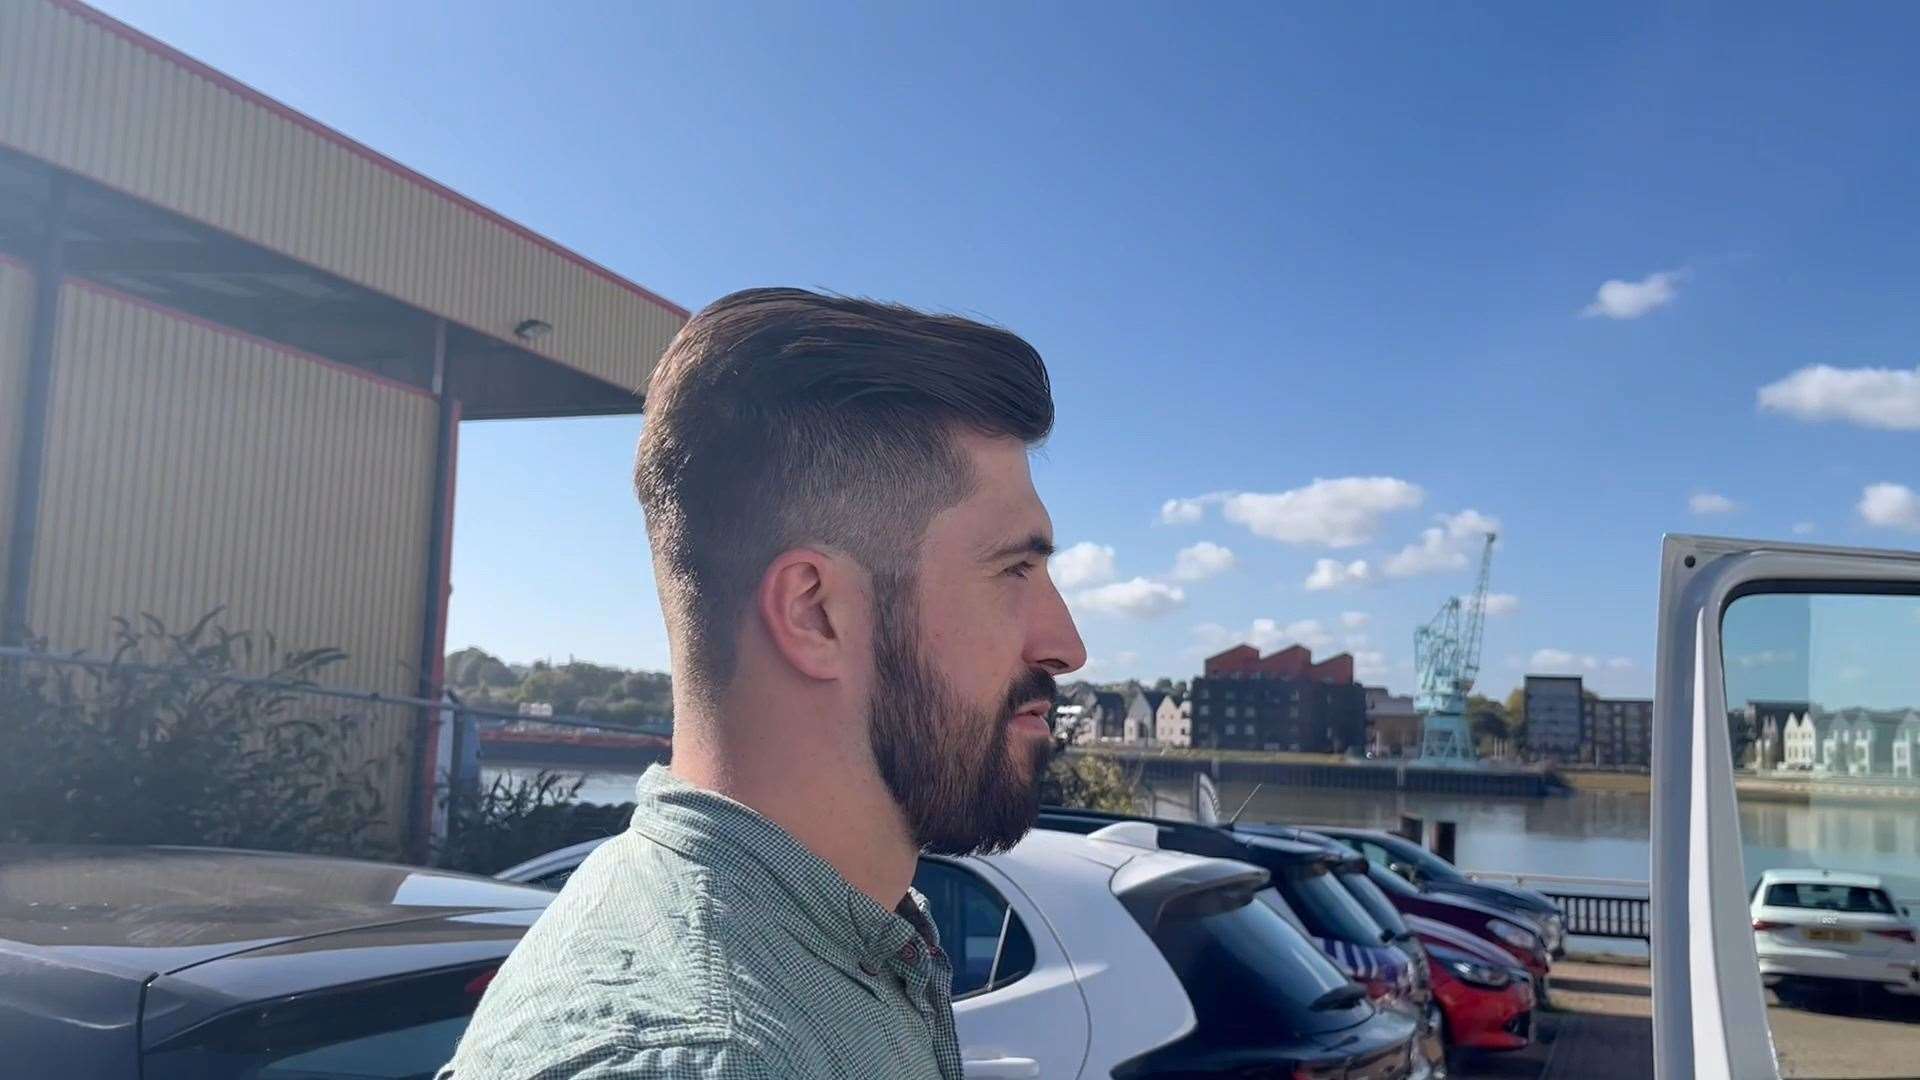 Ben shows off his new hair cut